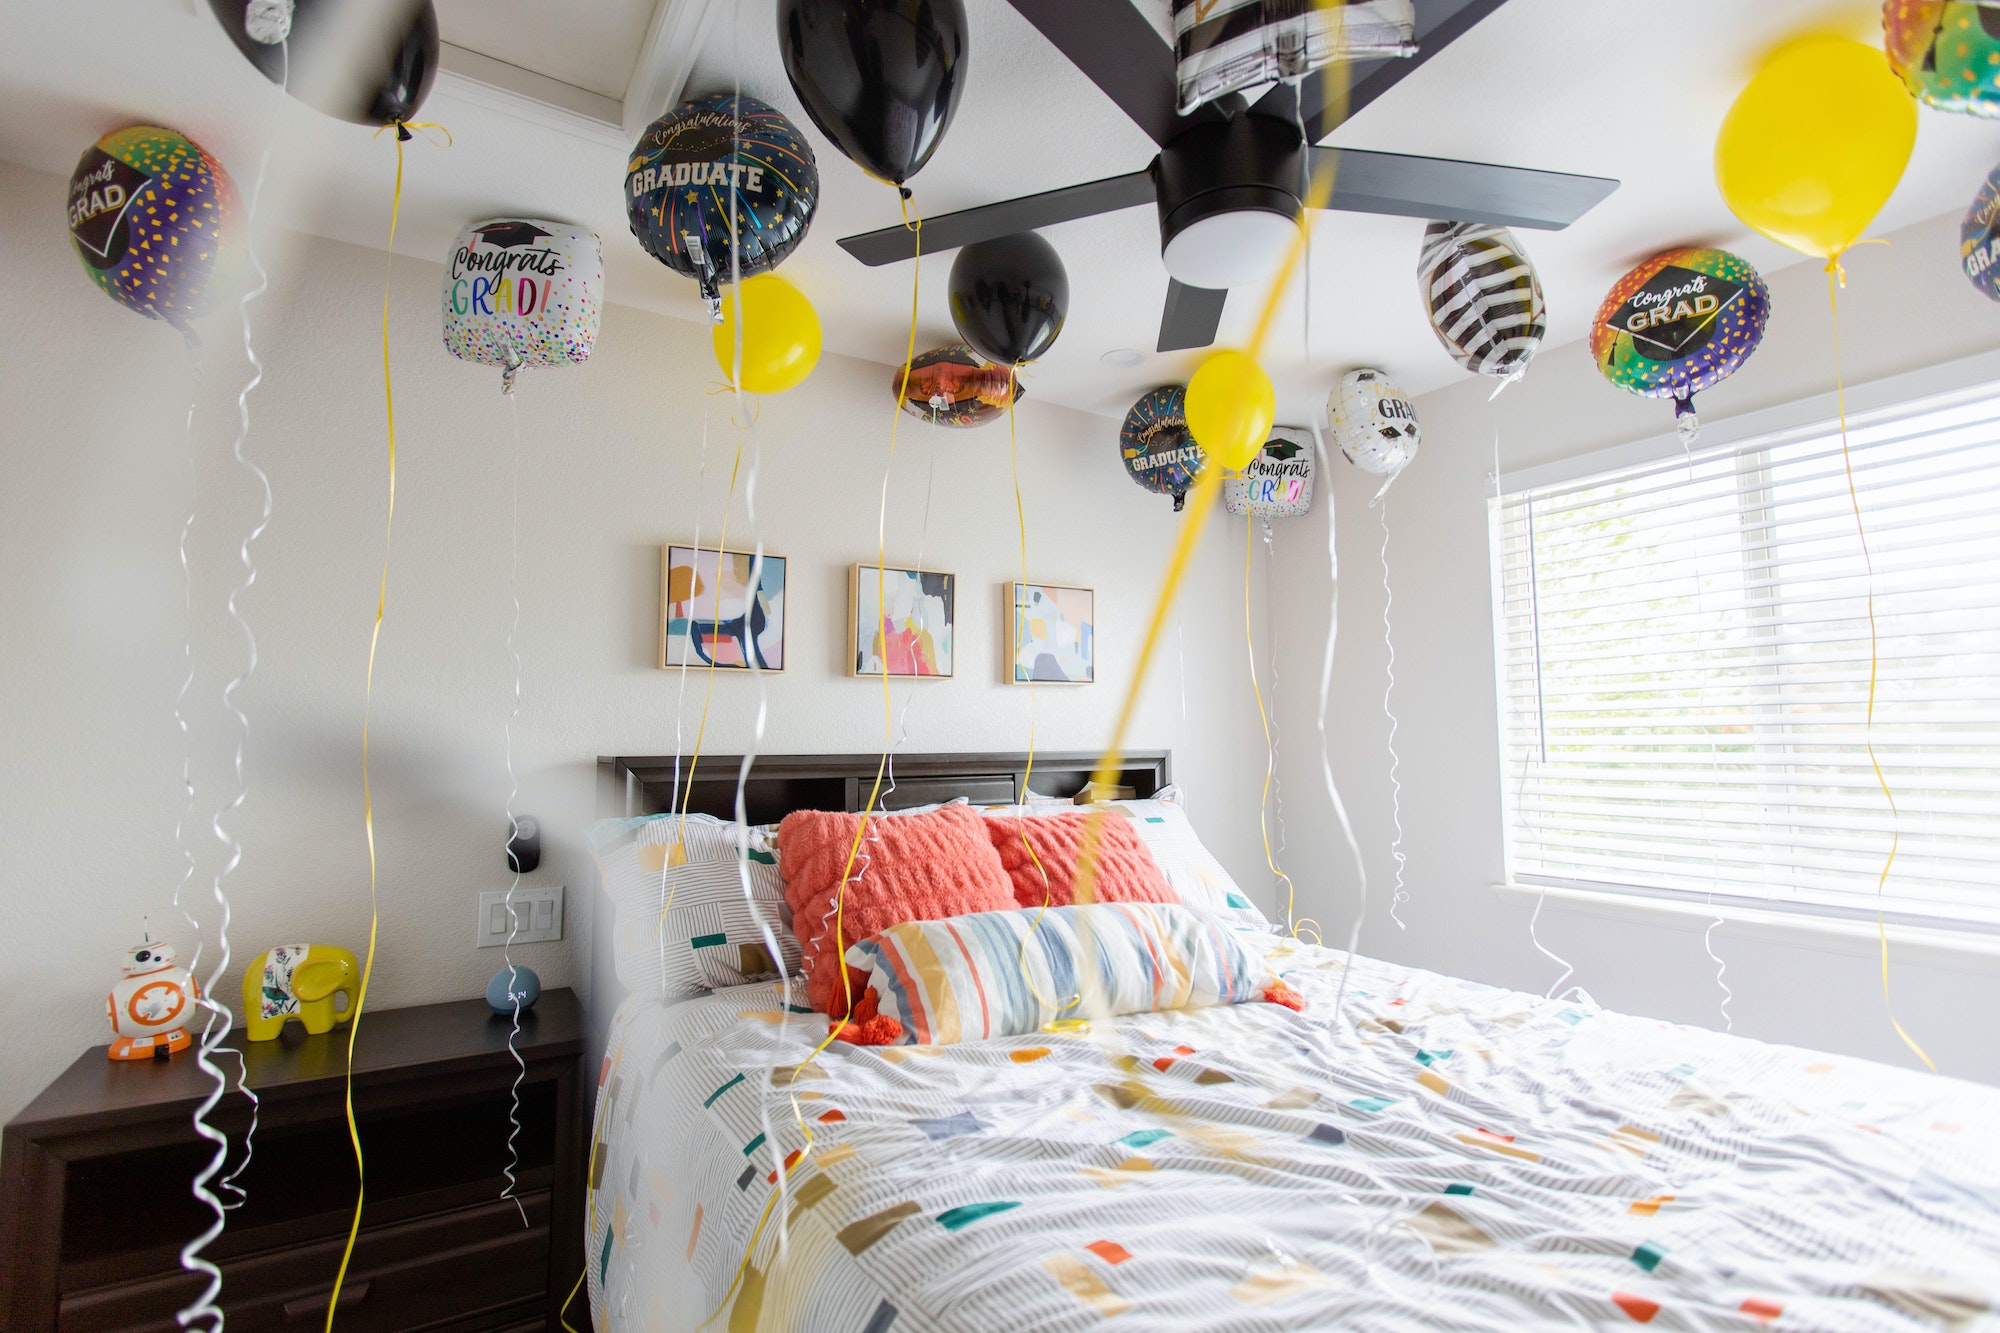 Graduation balloons in a bedroom